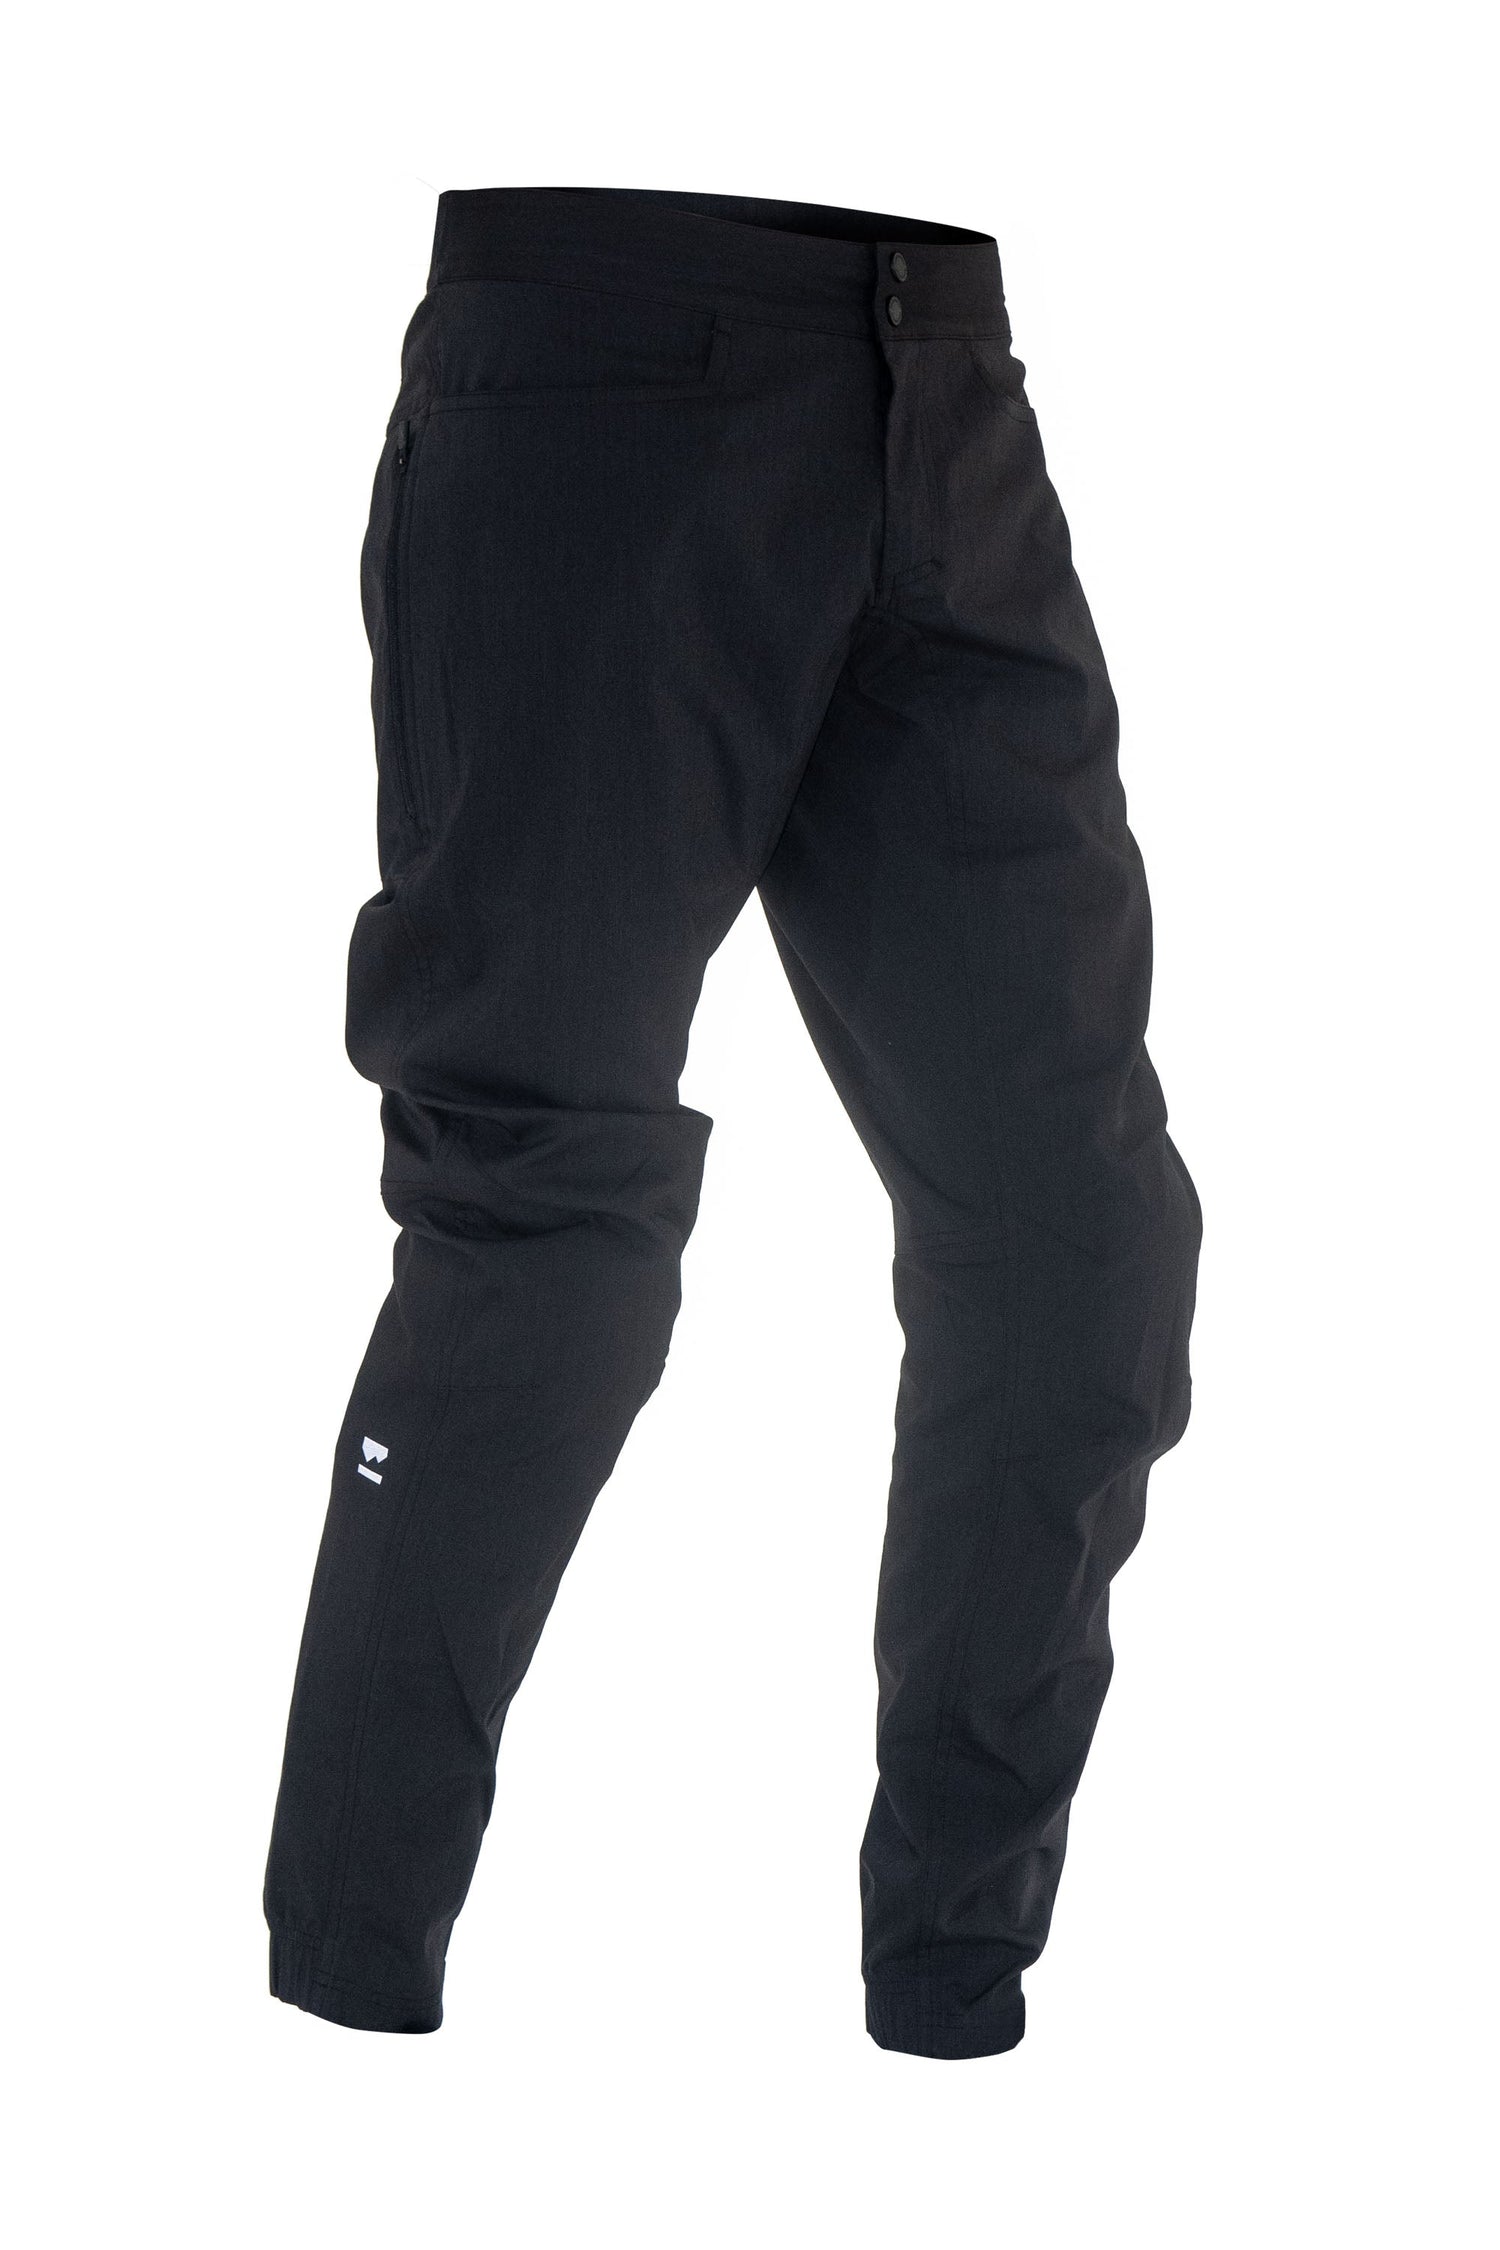 Mons Royale M's Virage Pants - Recycled Polyester & Merino Black Pants